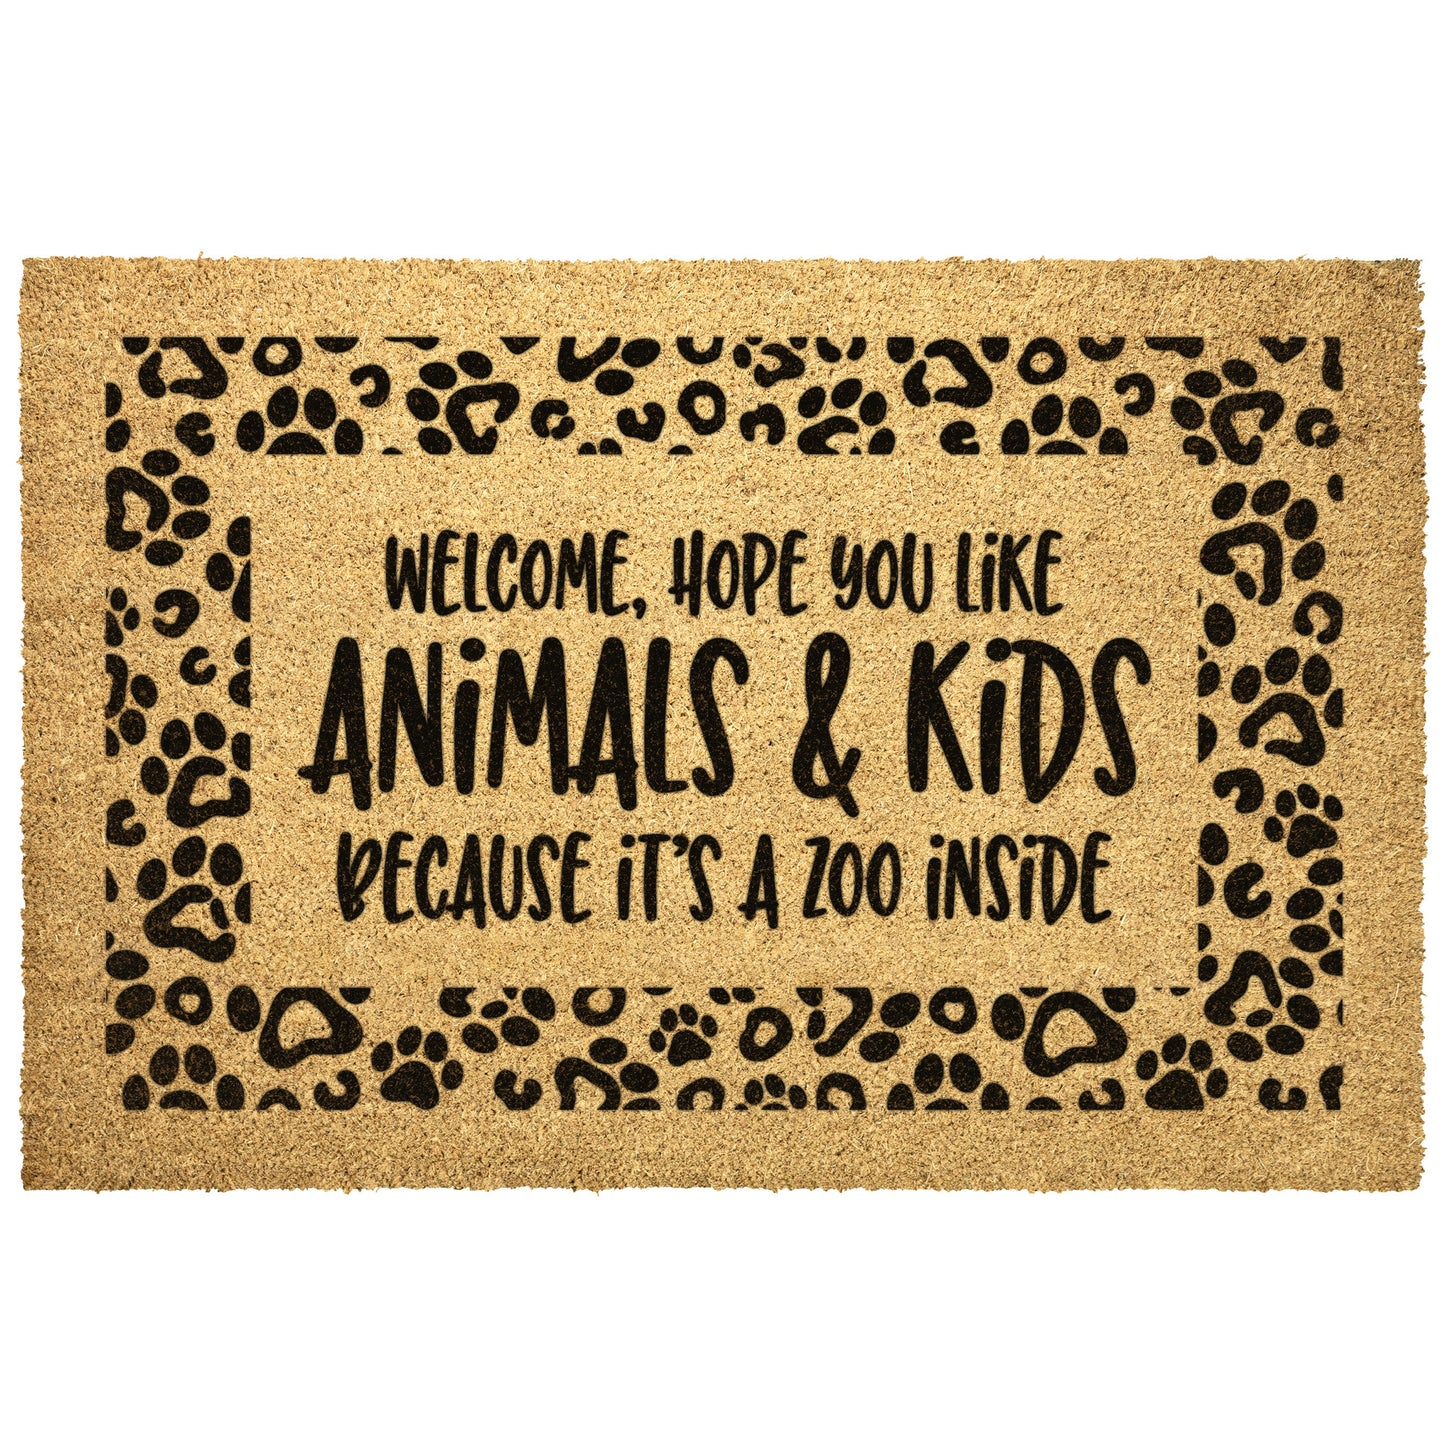 Hope You Like Animals & Kids, Door mat, Funny Doormat, Wedding Gift, H ousewarming gift, Home Doormat, Welcome mat, closing gift